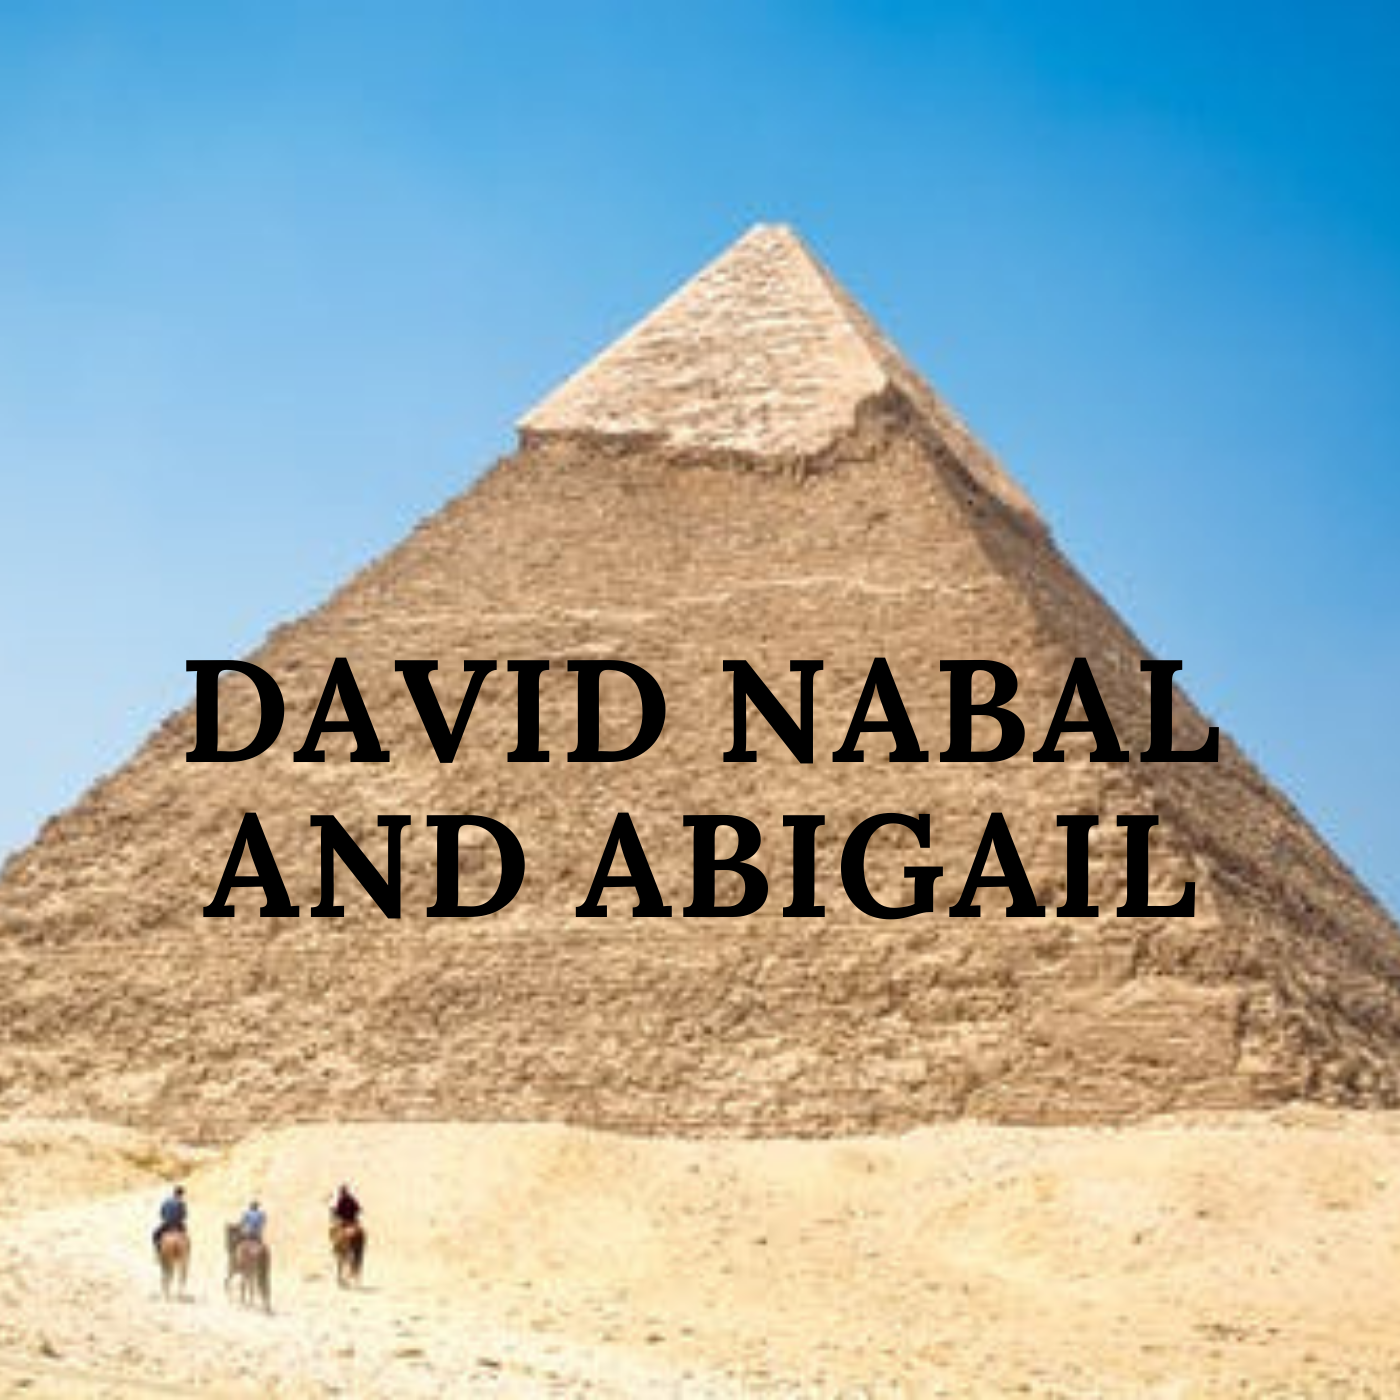 DAVID NABAL AND ABIGAIL